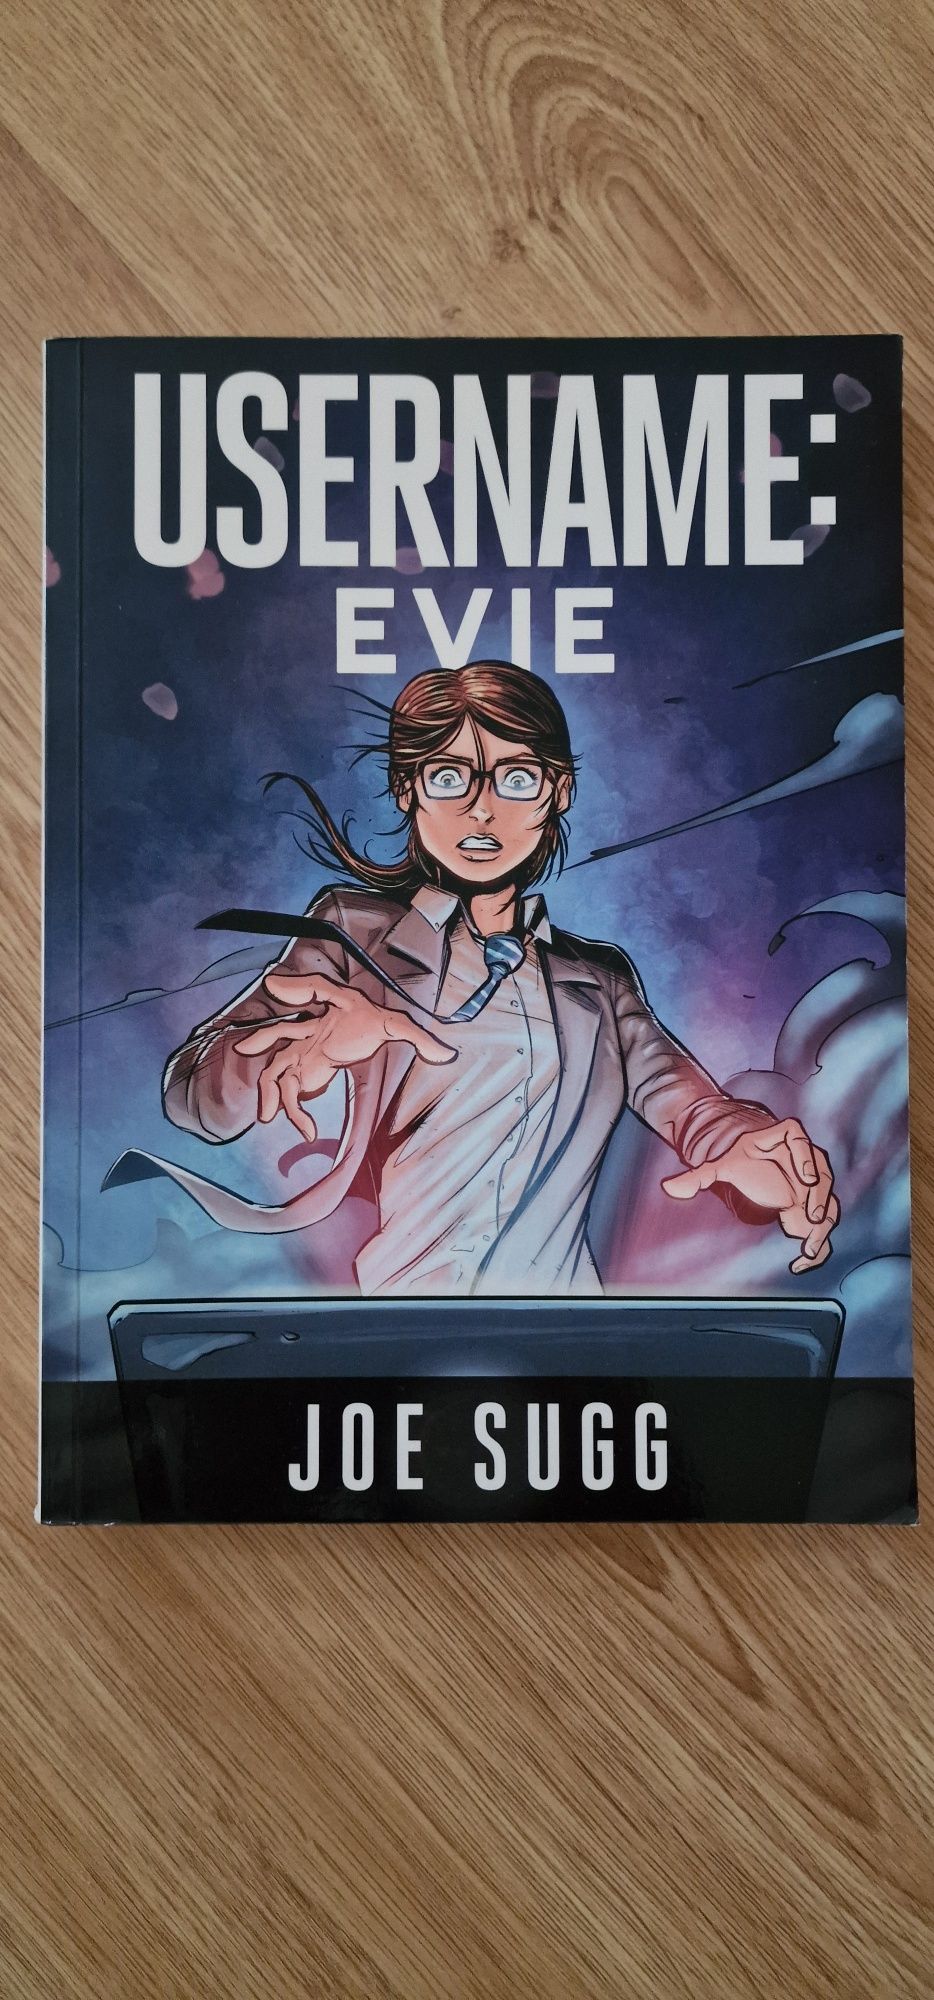 Username Eve Joe Sugg